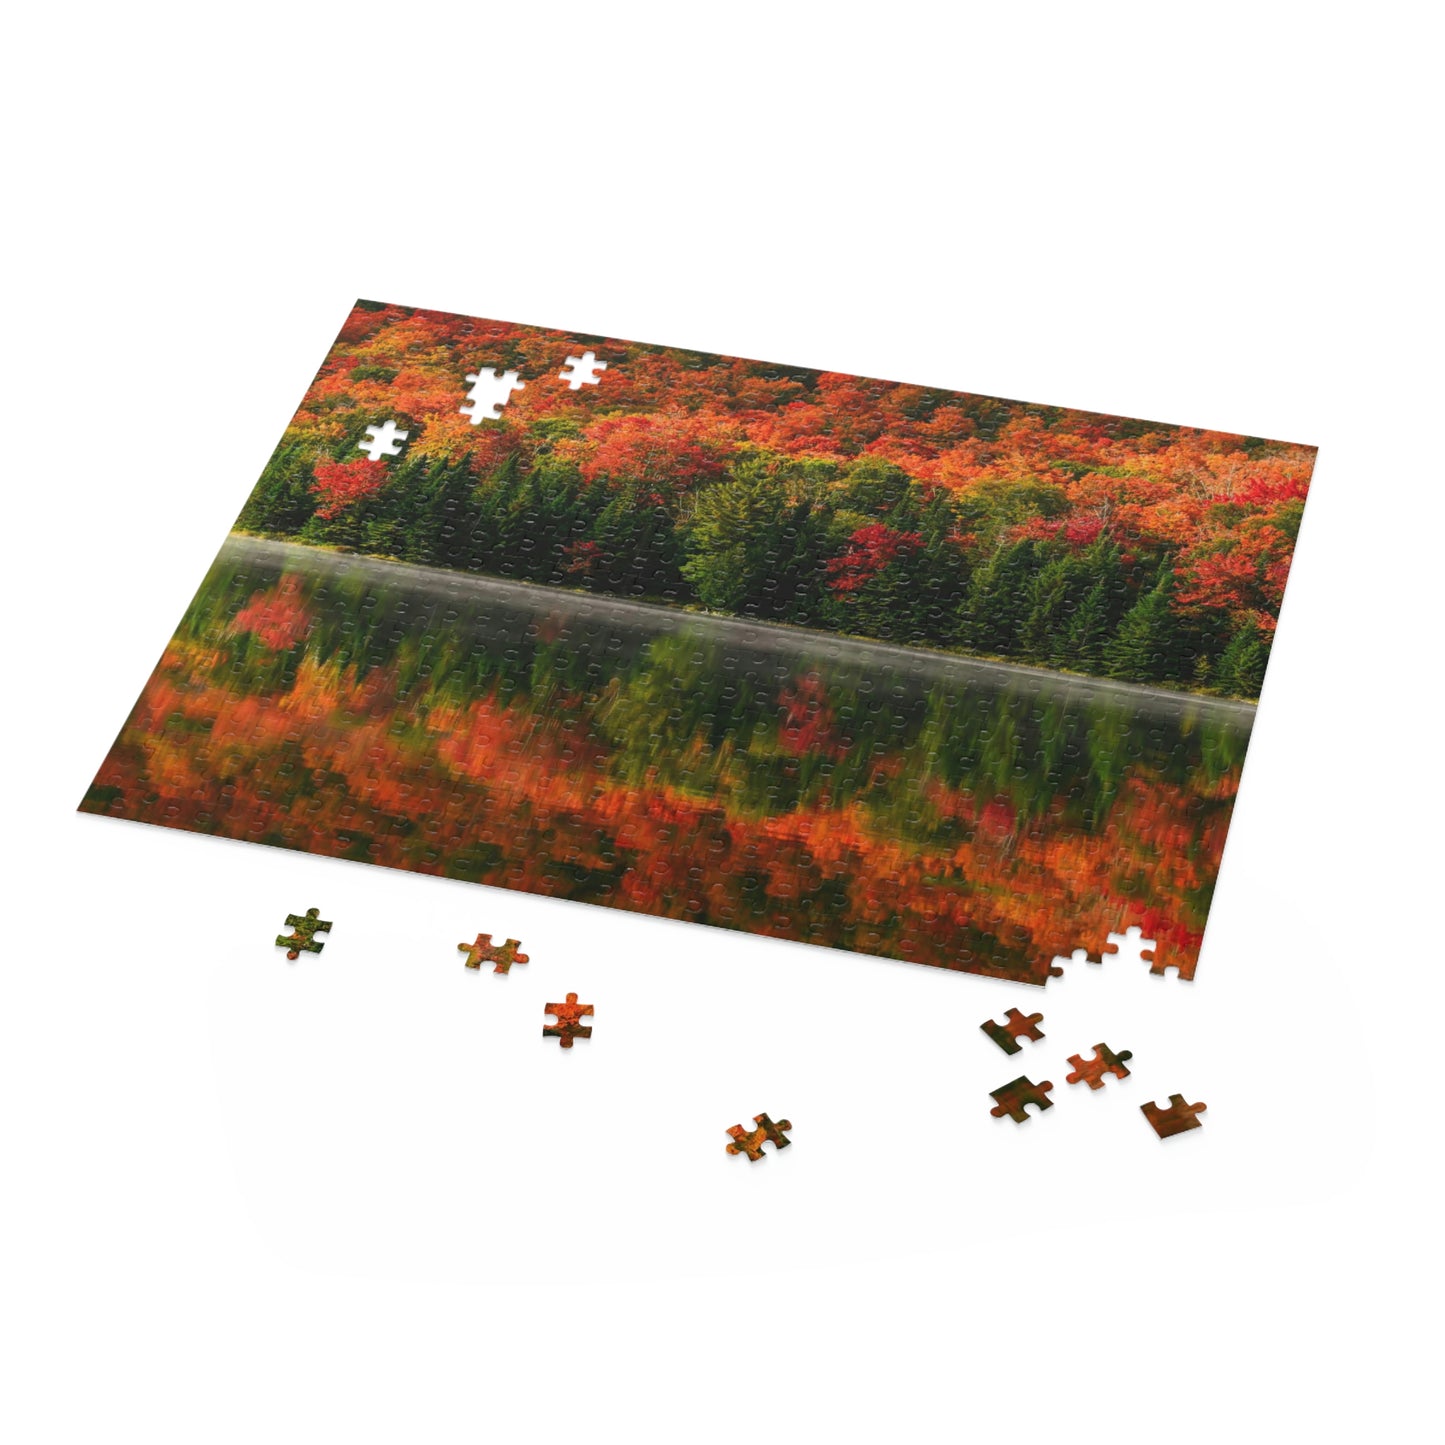 Puzzle - Autumn Reflections